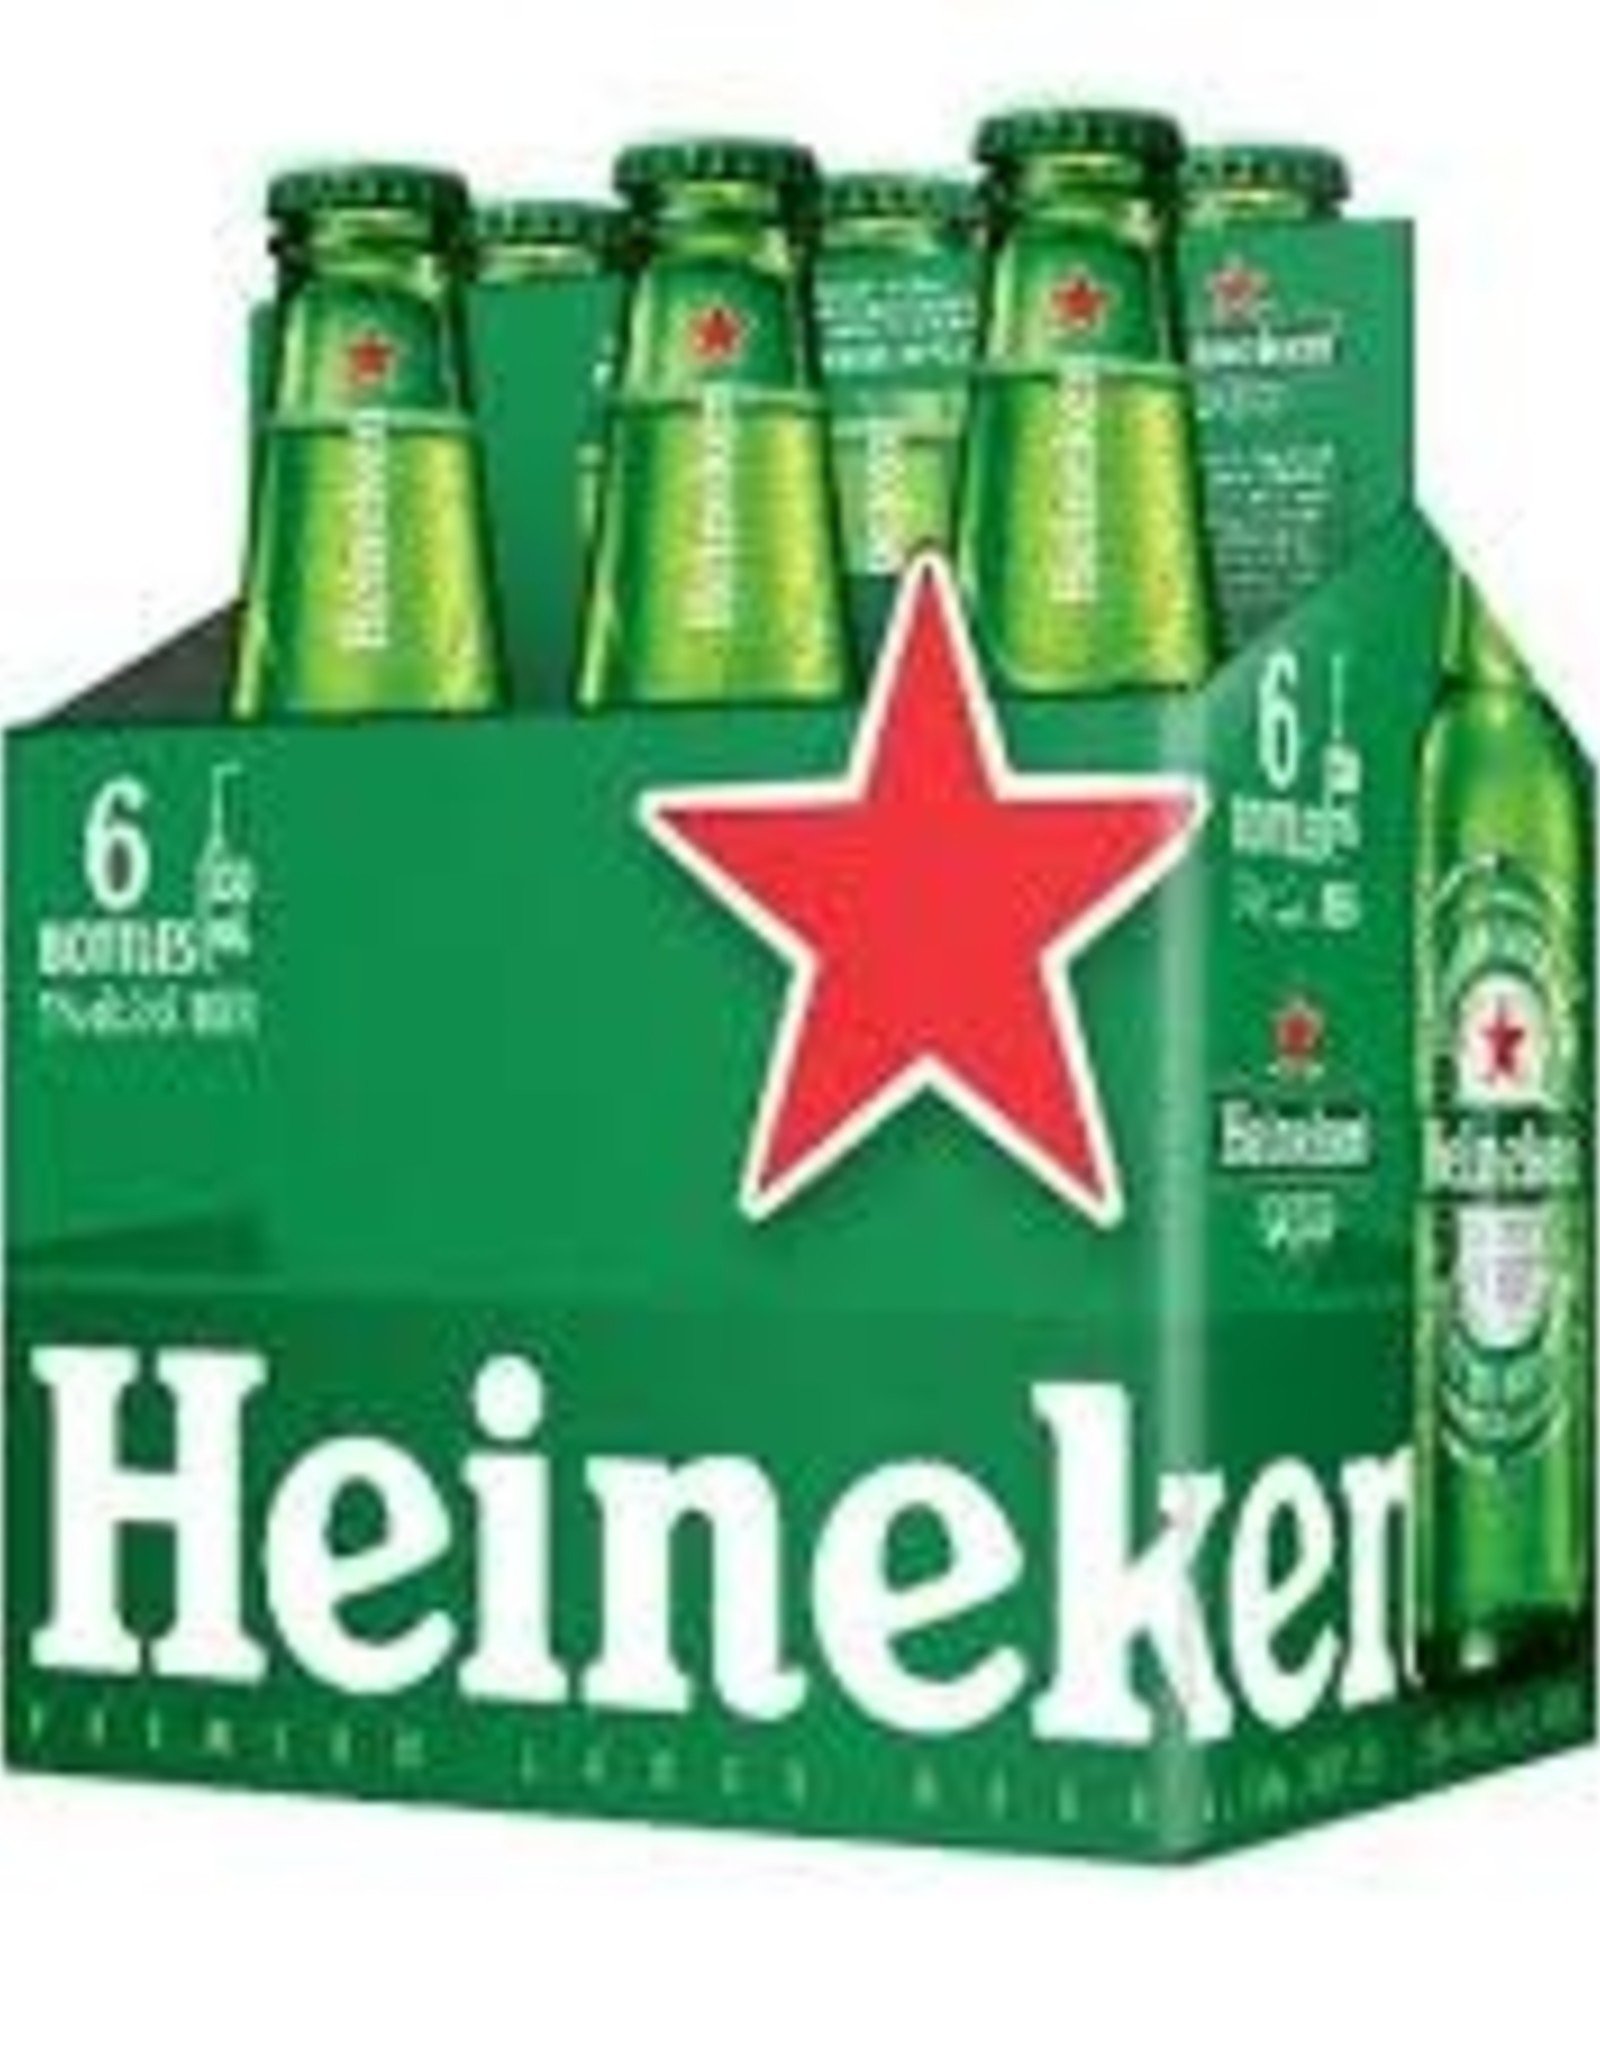 Heineken Heineken - 12oz - 6pk - Bottles